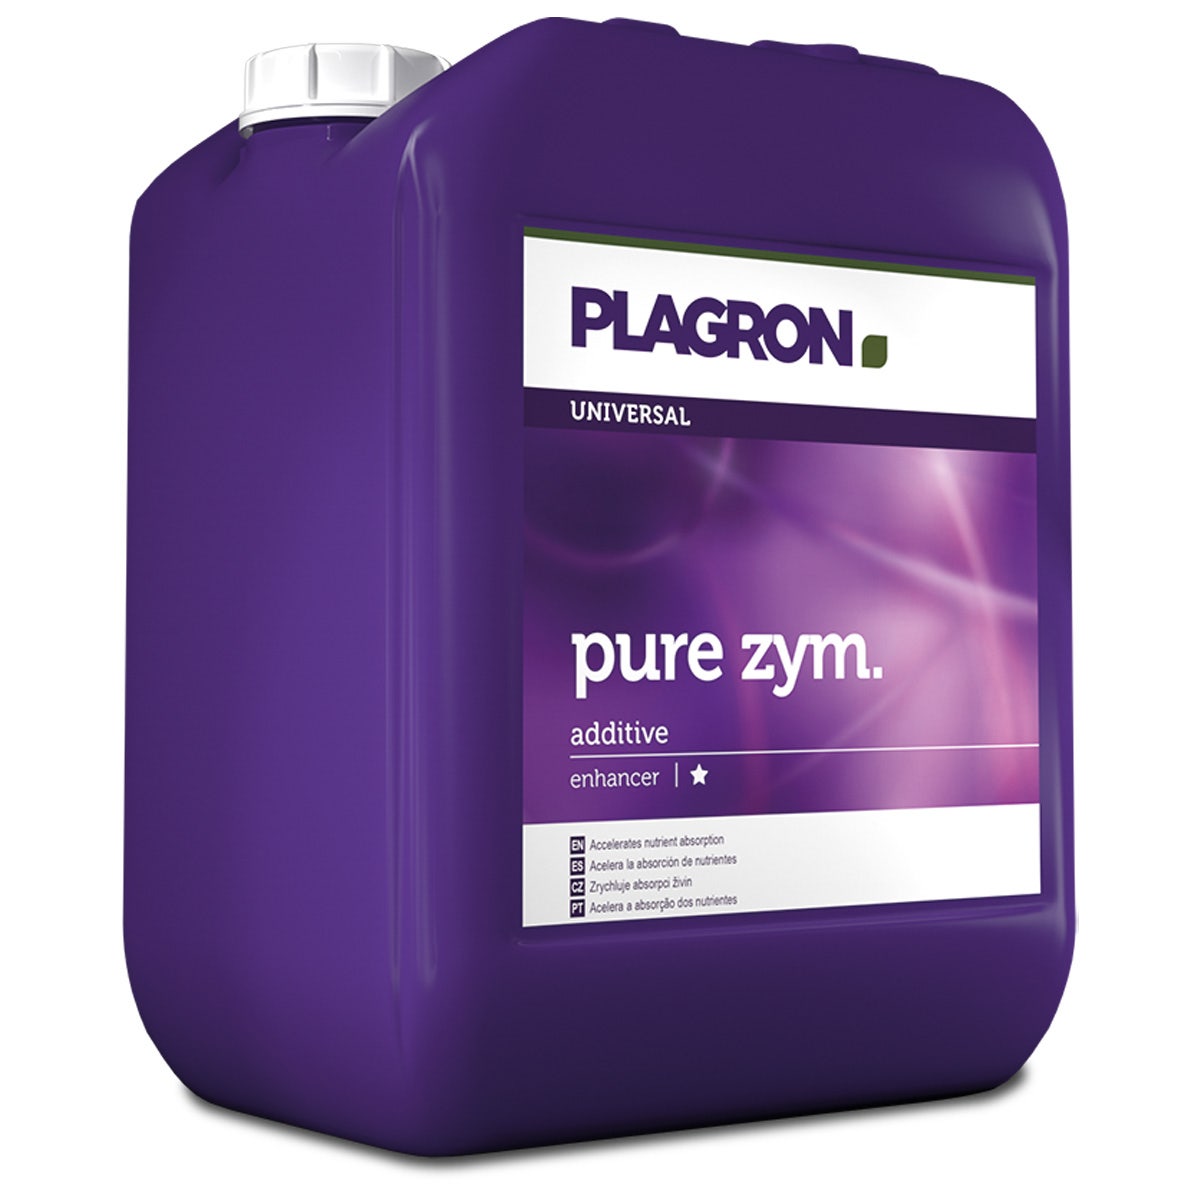 Plagron Nutrients - Pure Zym